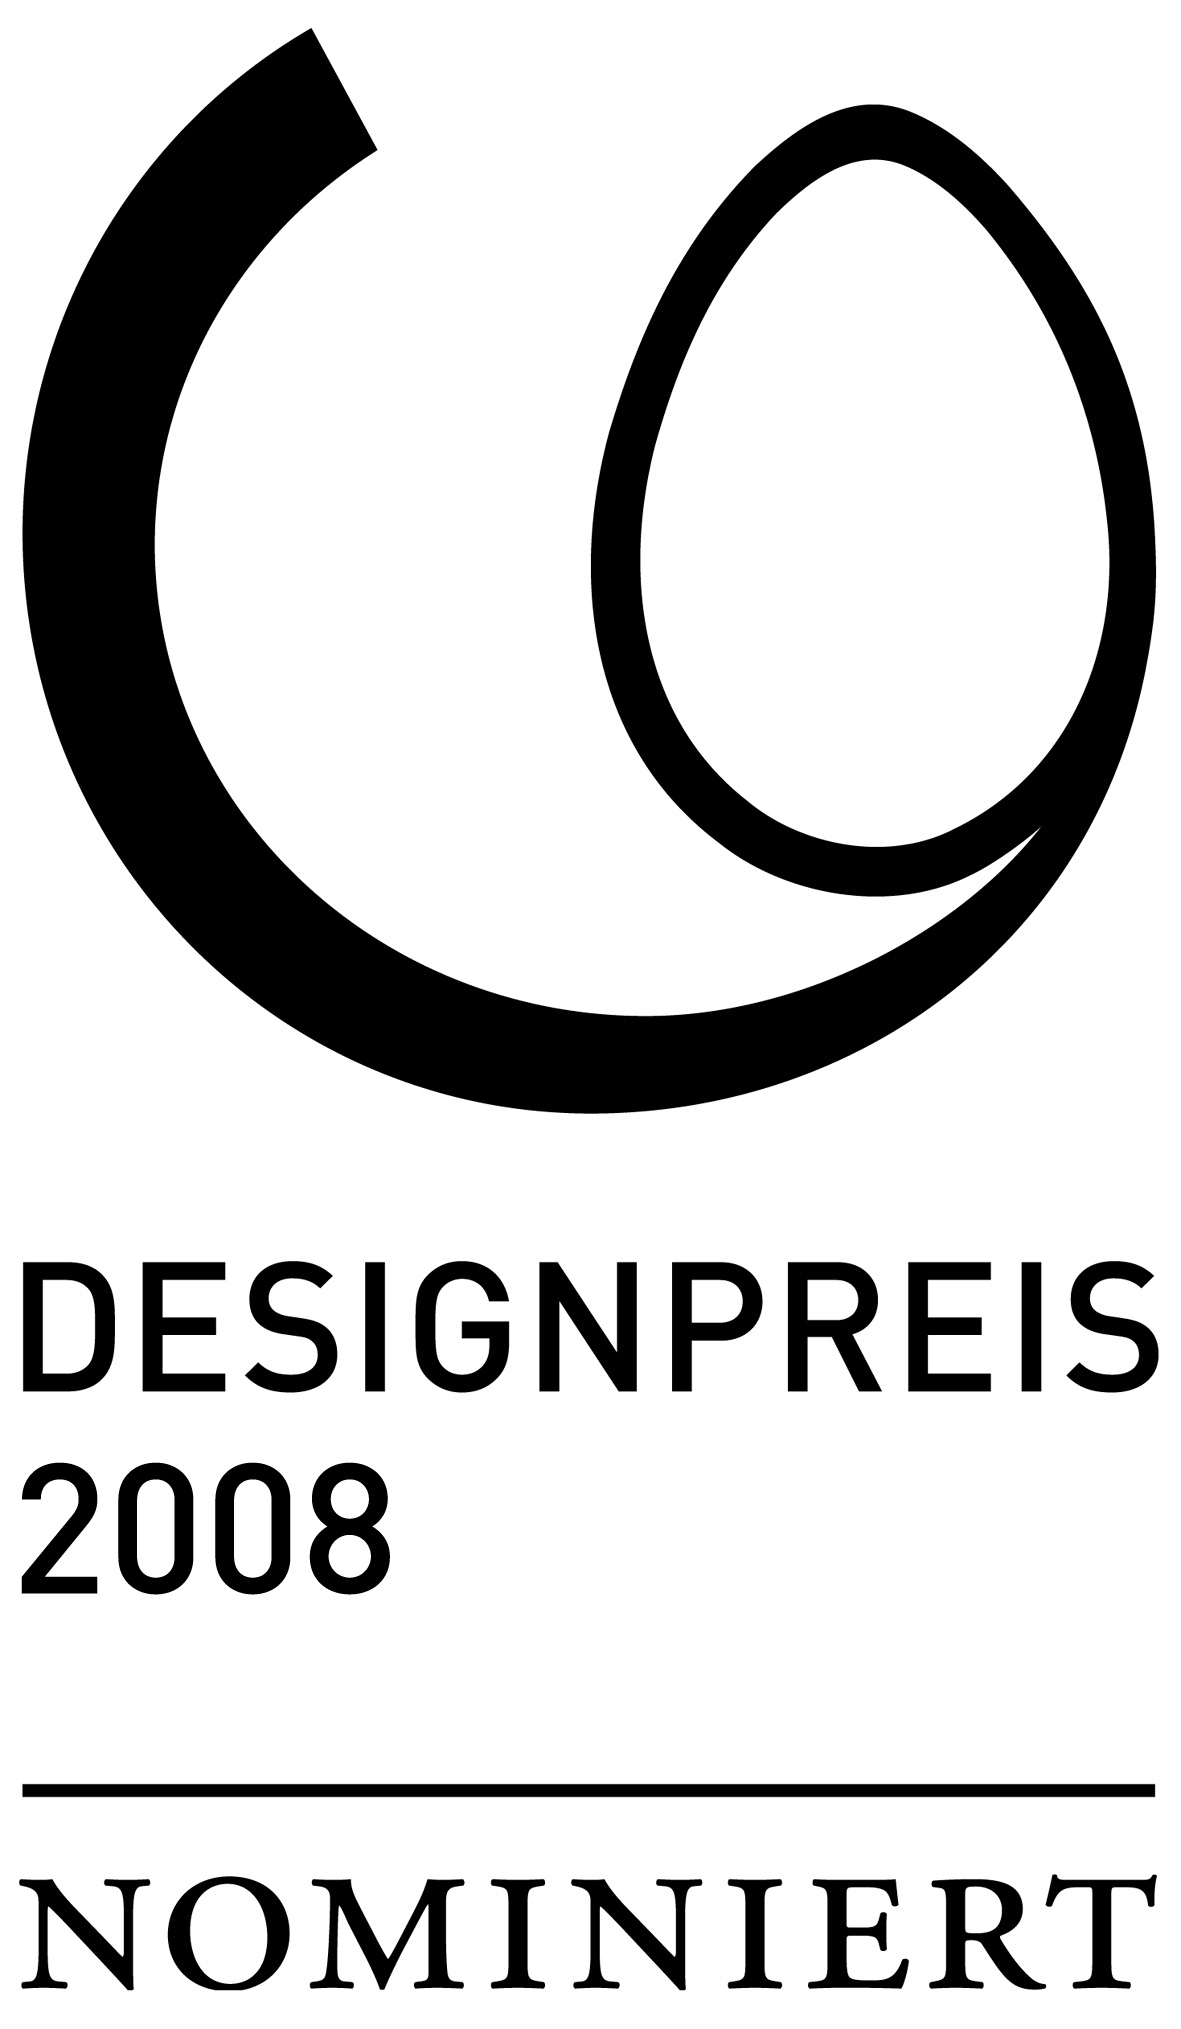 Designpreis